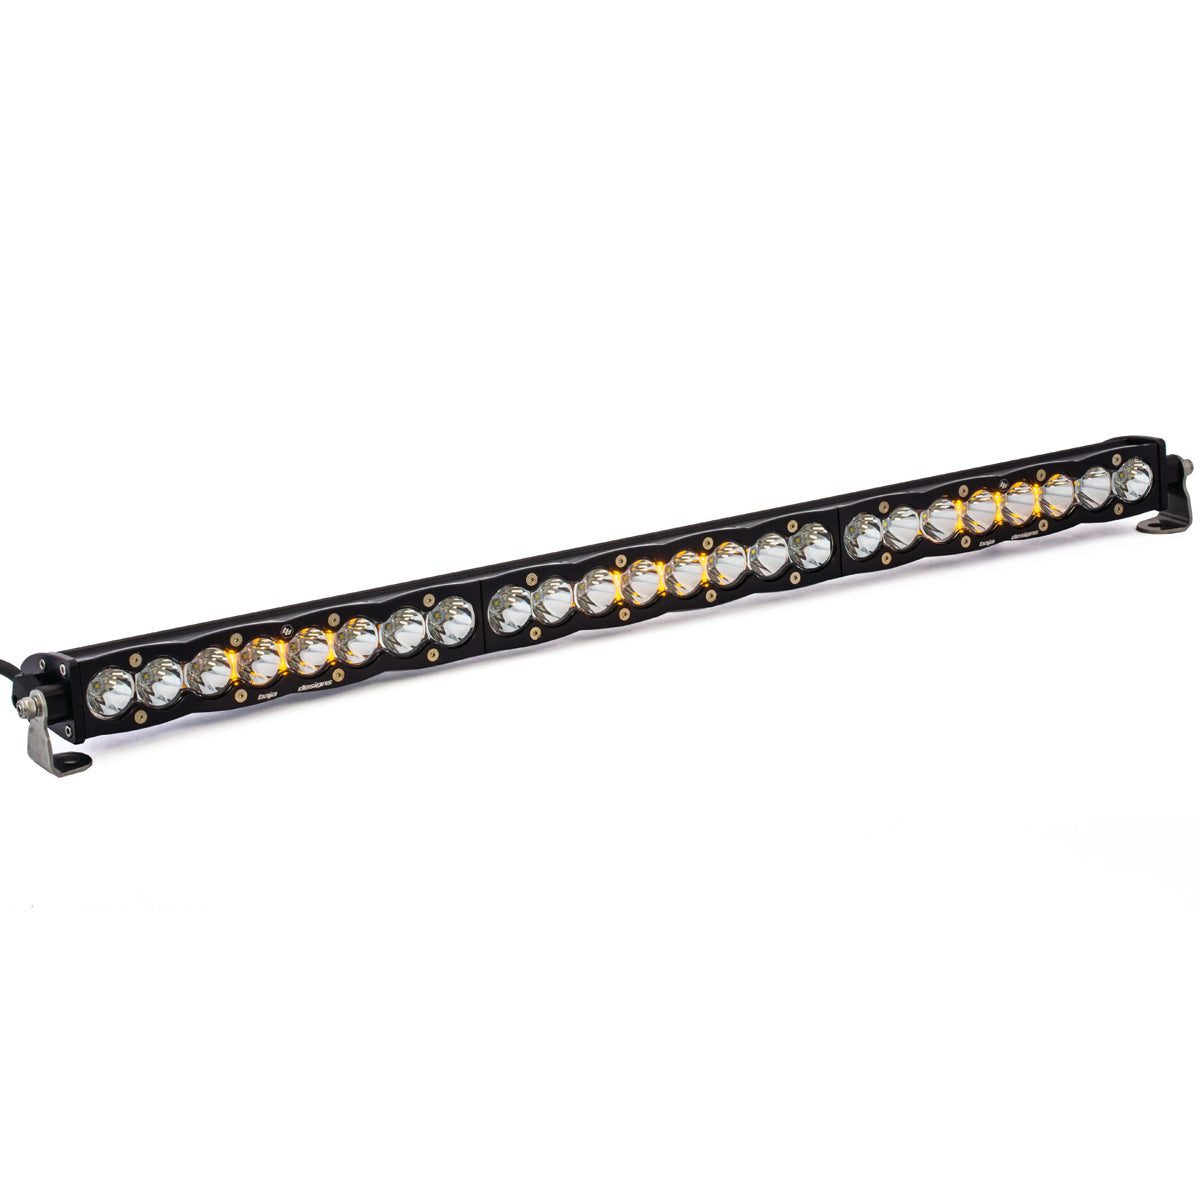 S8 Straight LED Light Bar - Universal